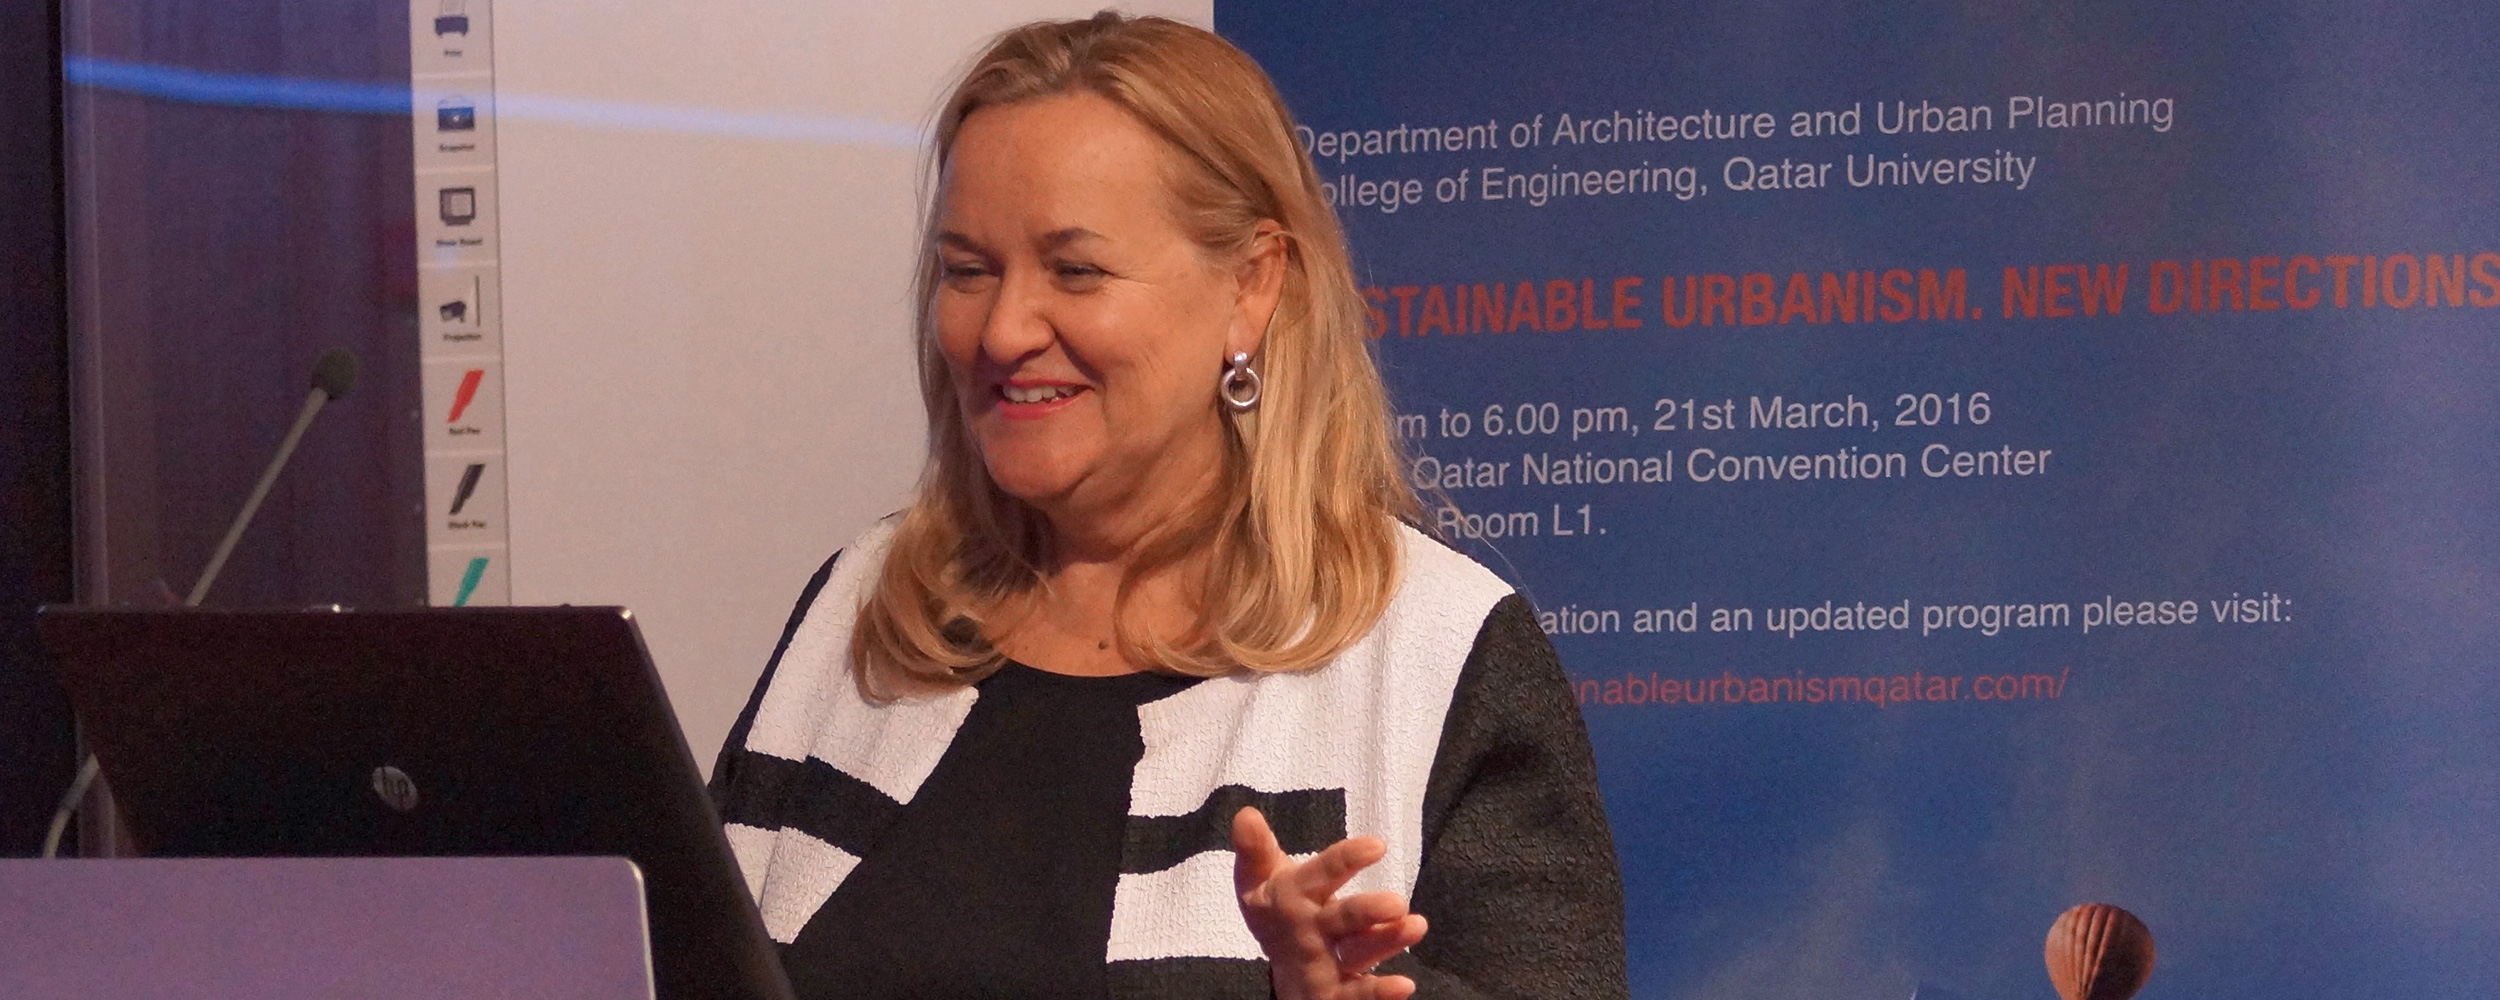 Patricia McCarney, Sustainable Urbanism New Directions Workshop, Qatar University, 21 March 2016, © Qatar University.